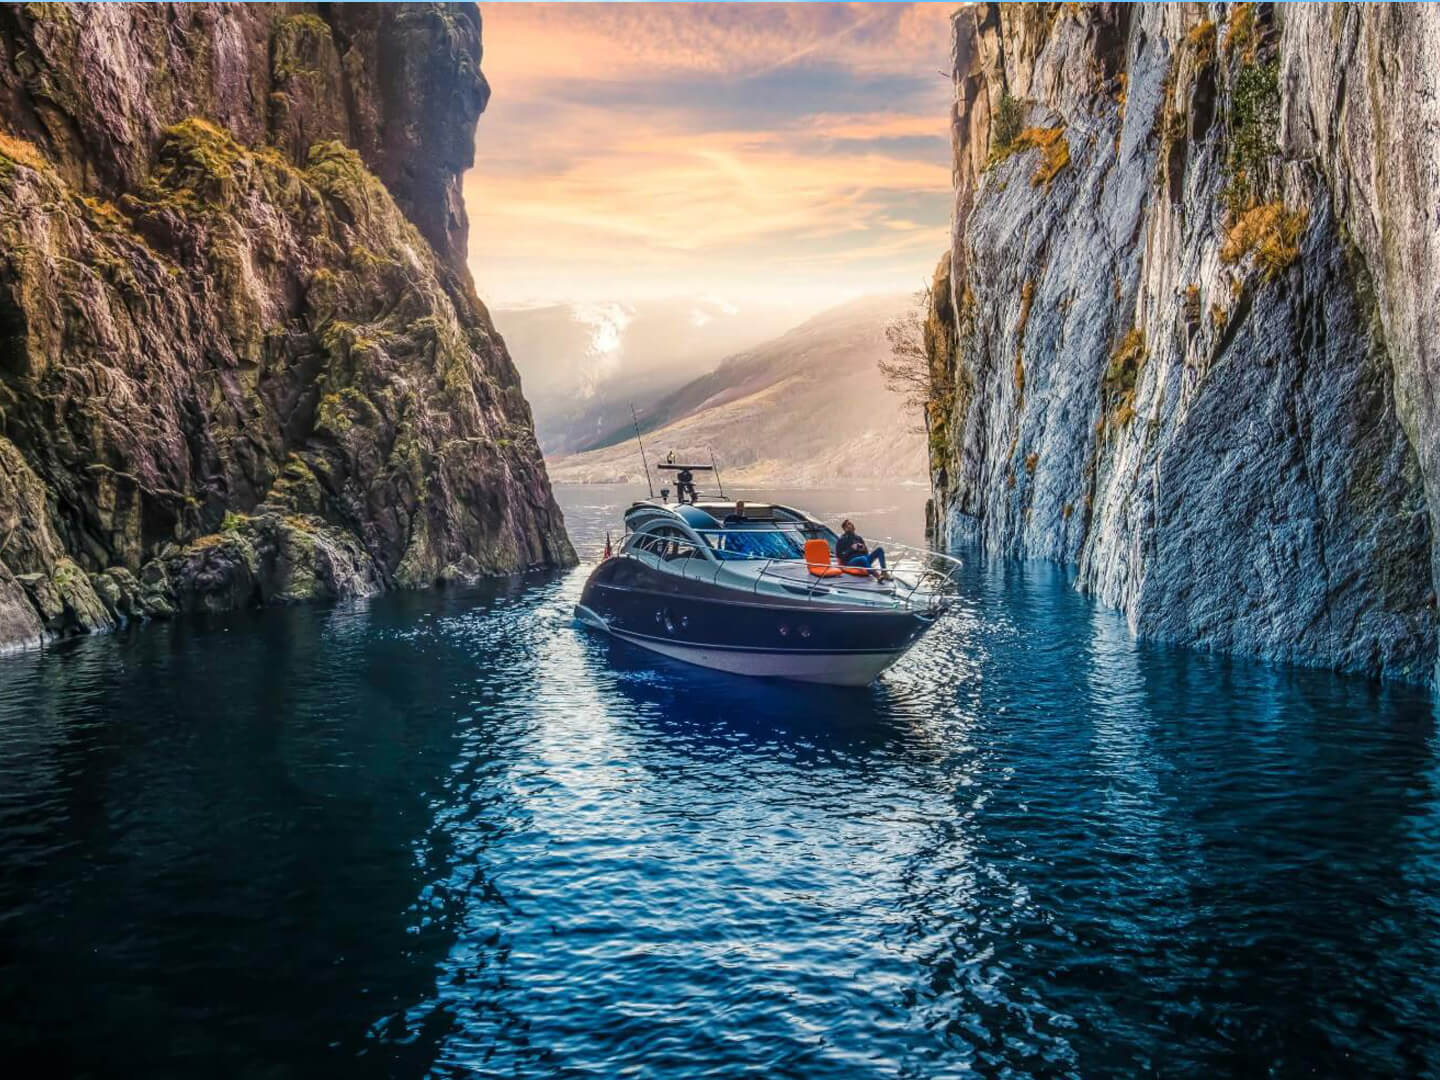 fjord cruise luxury